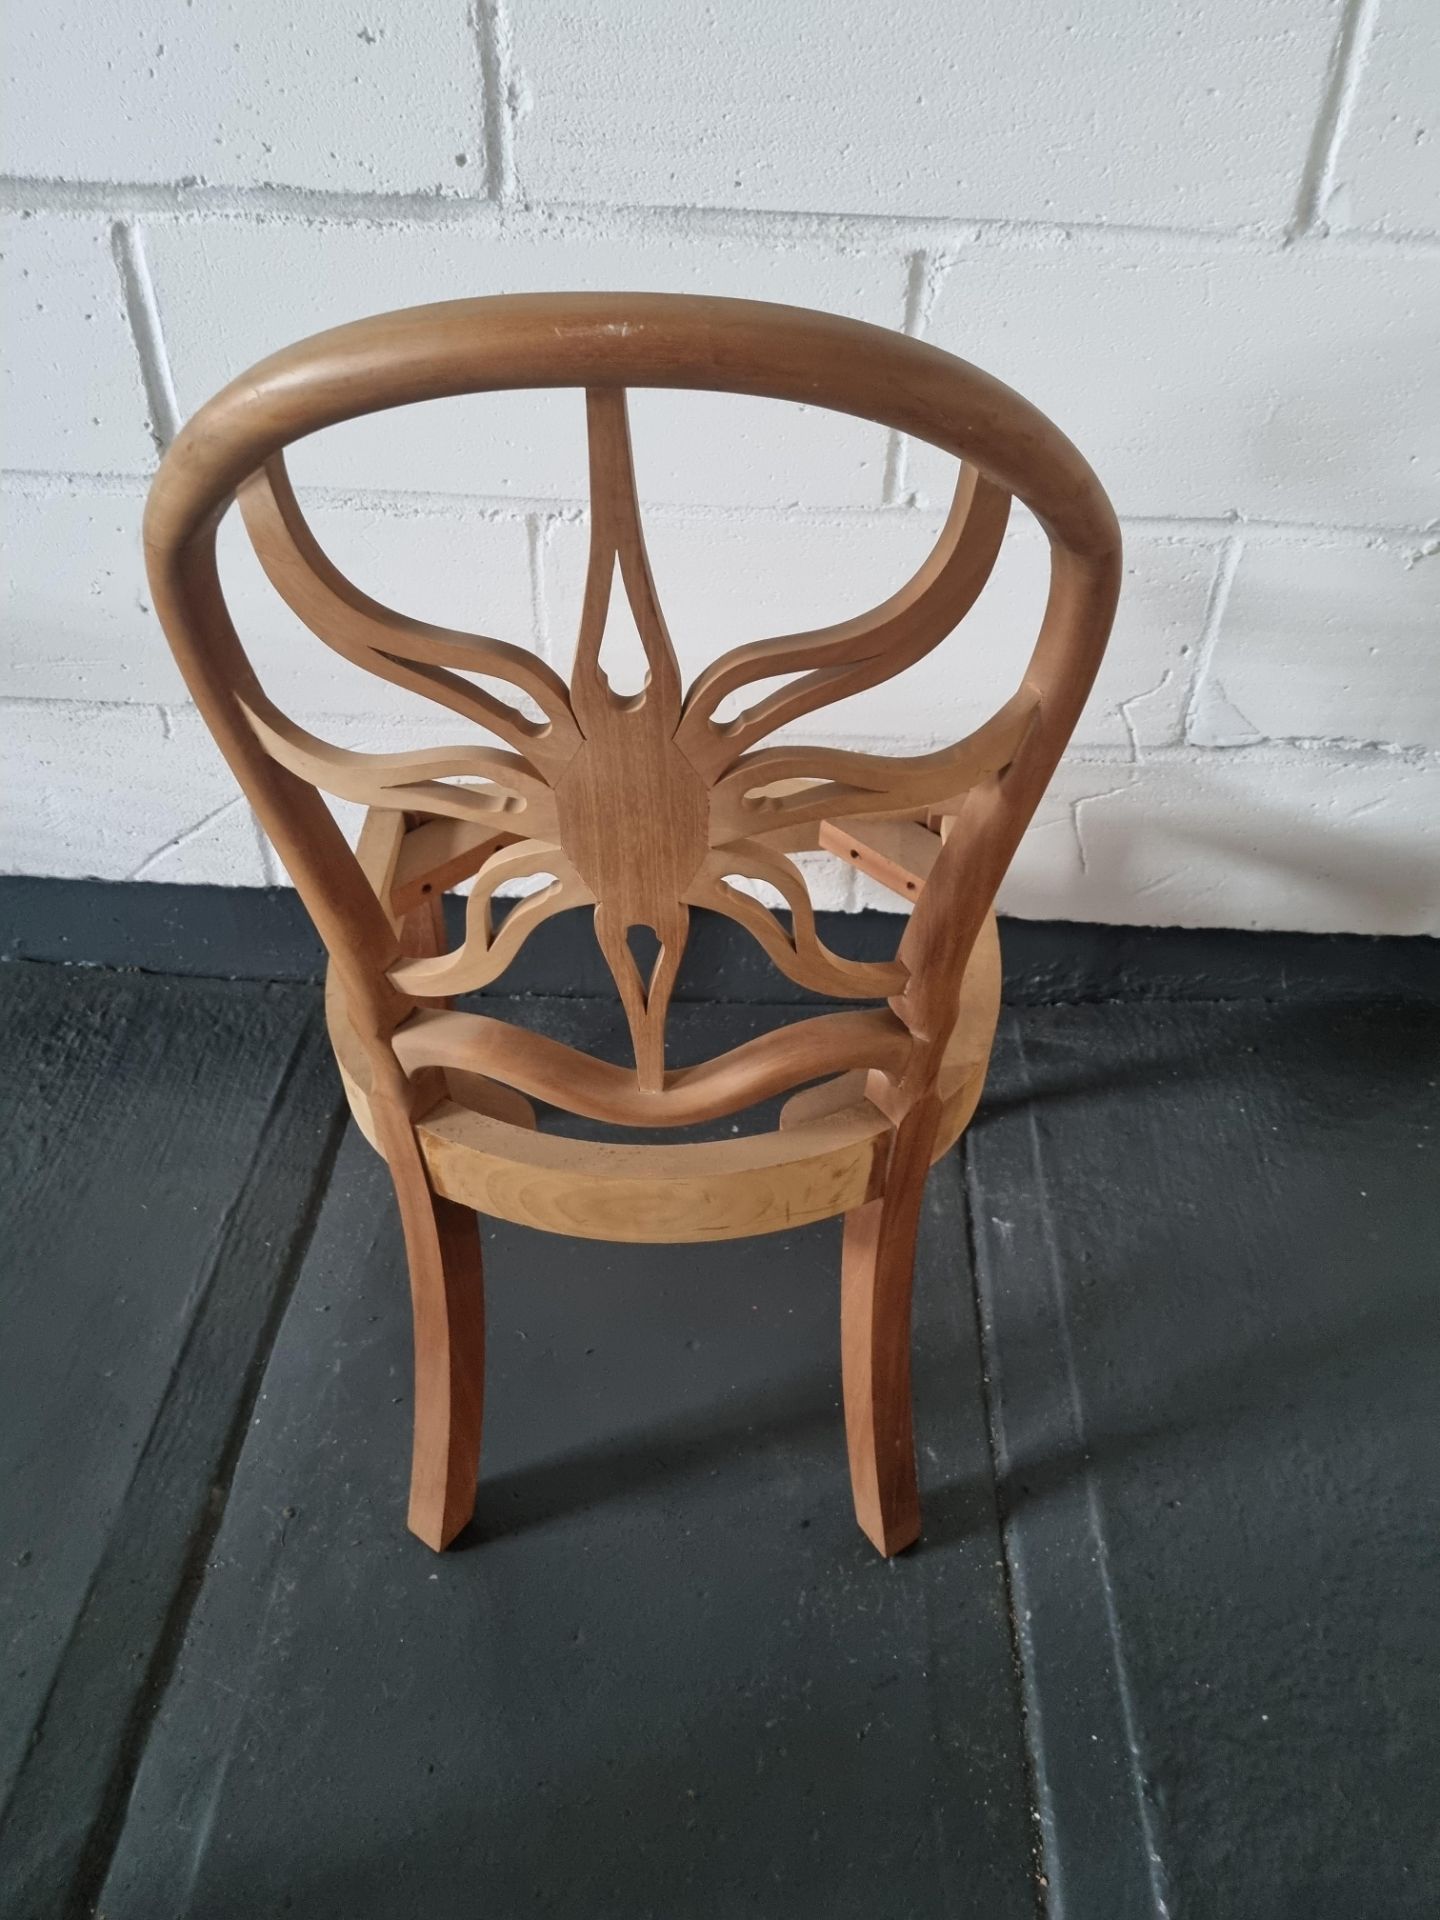 Arthur Brett Unupholstered & Unfinished Sunburst Side Chair George III Style The Unusual Design - Image 2 of 5